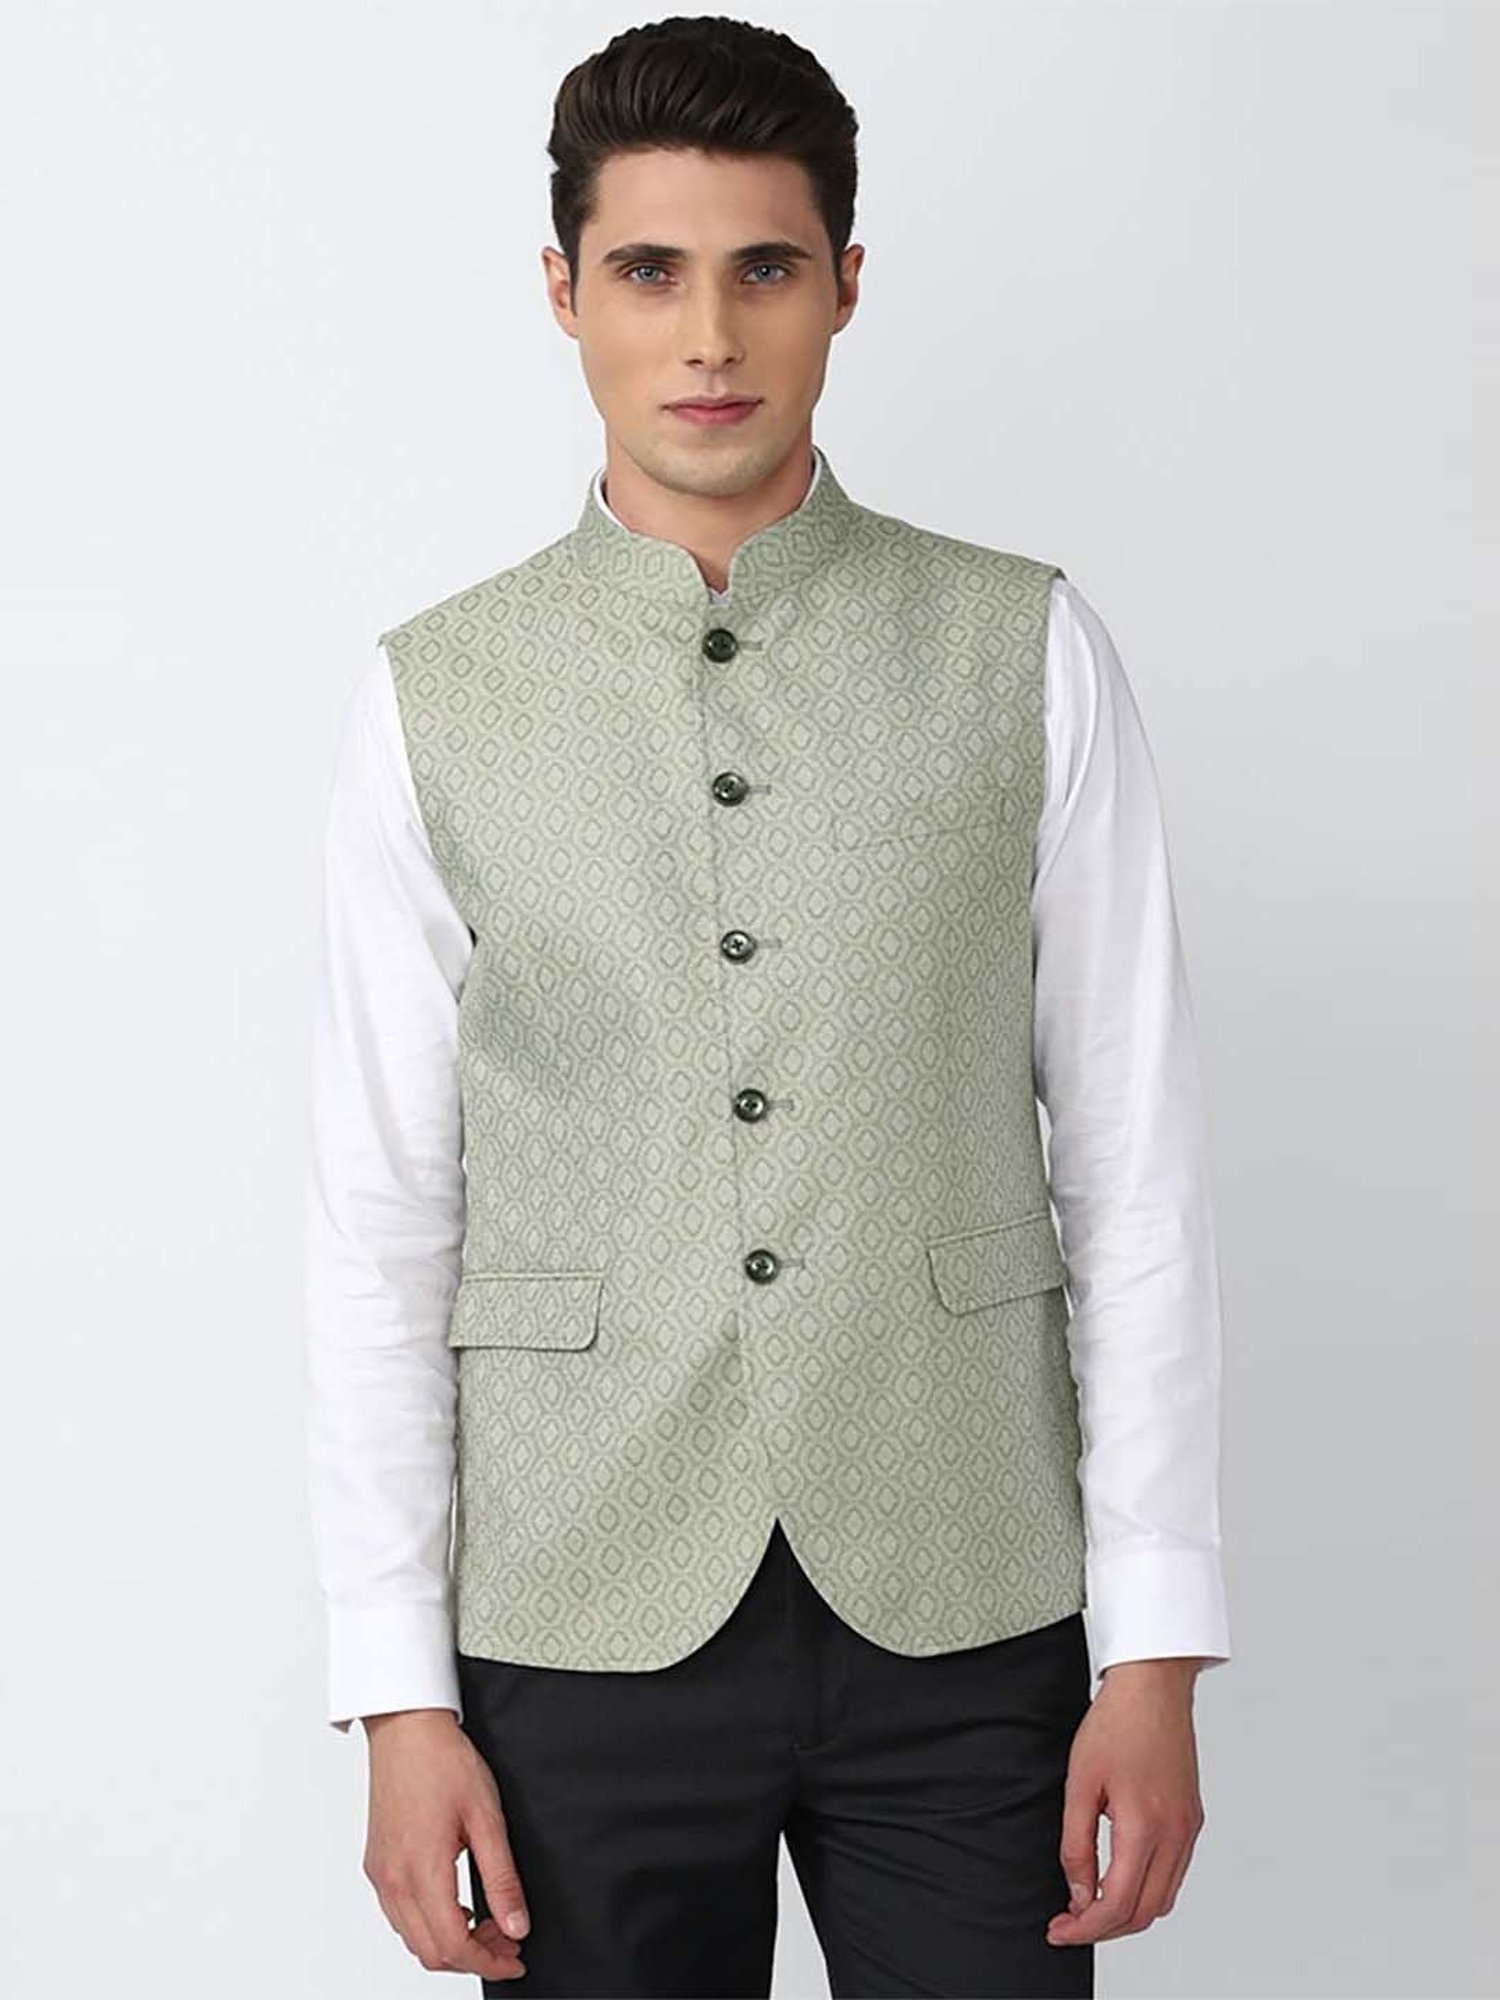 Xl And Medium Polyester Peter England Grey Jacket at Rs 2400/piece in Vapi